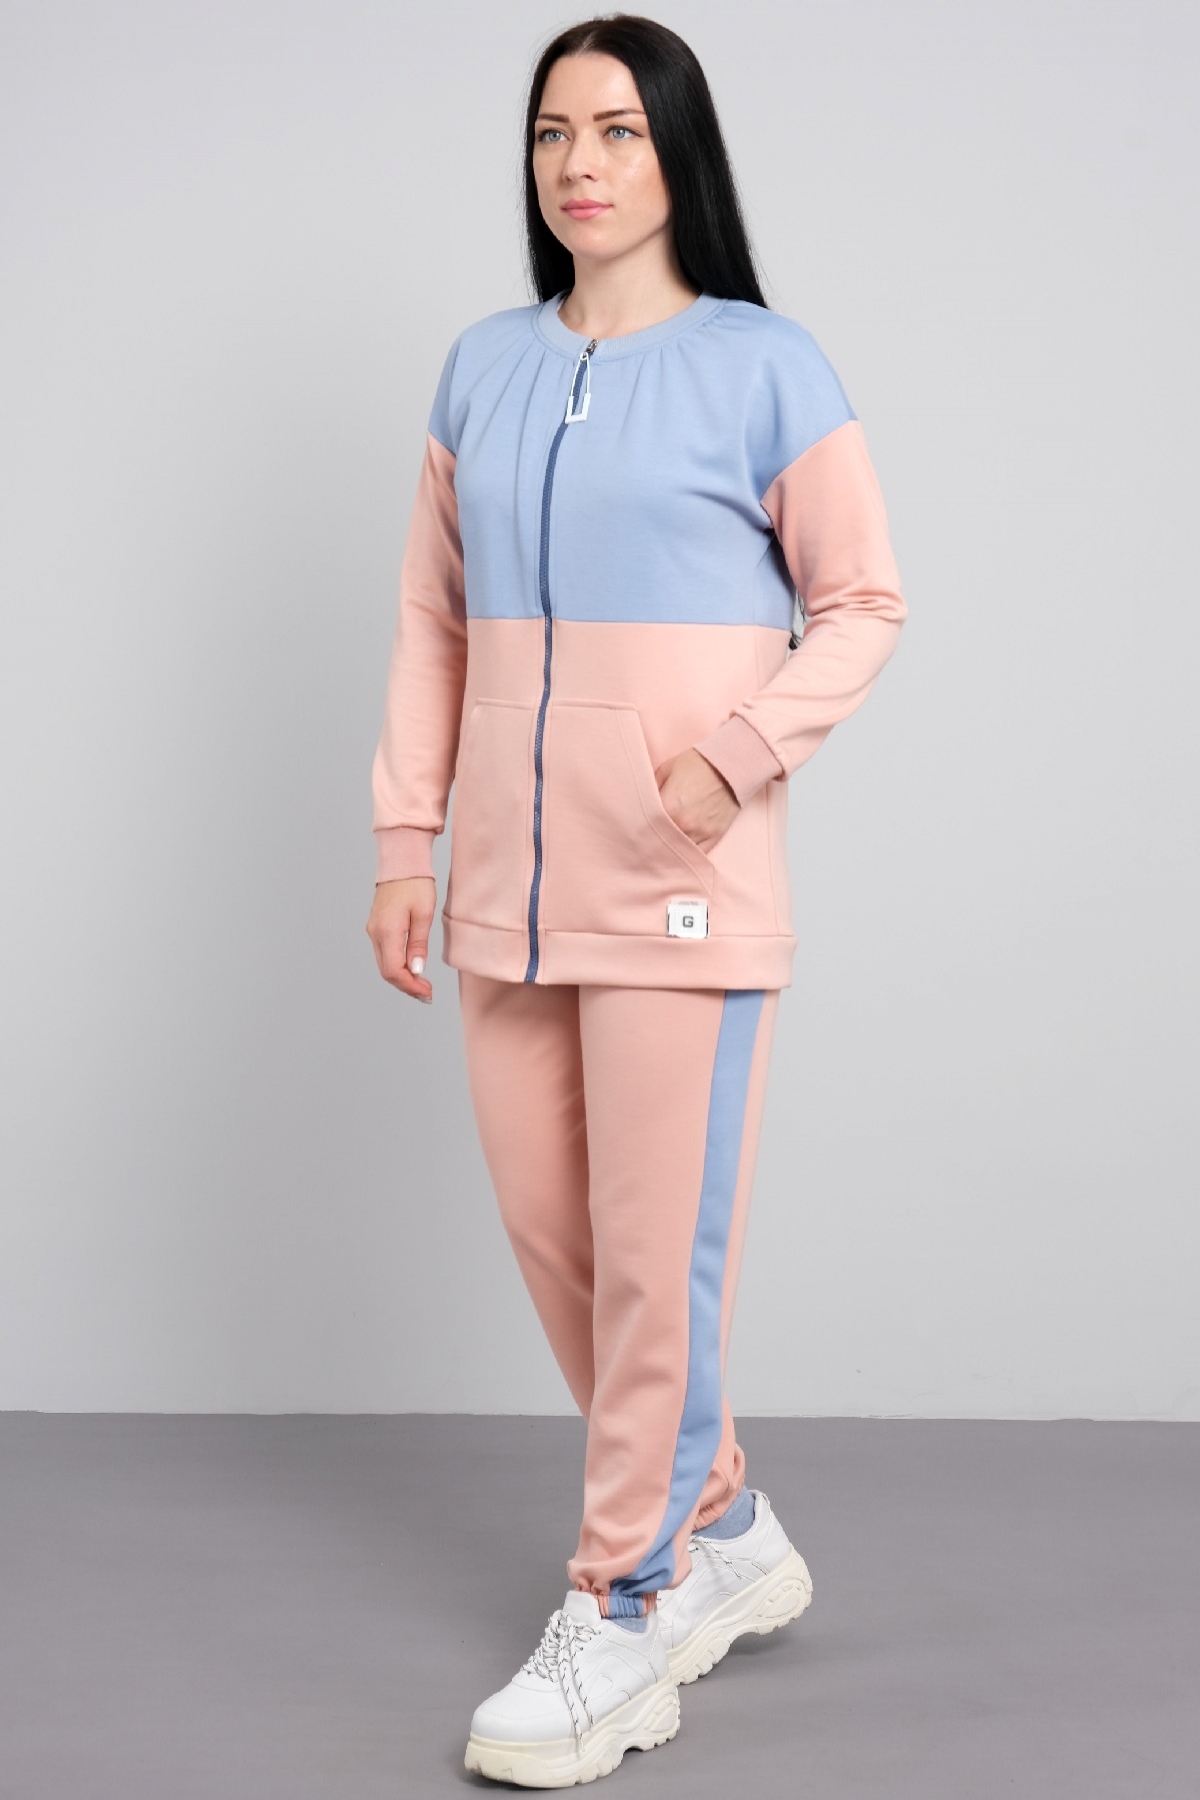 Women's 3 Piece Suits-powder pink